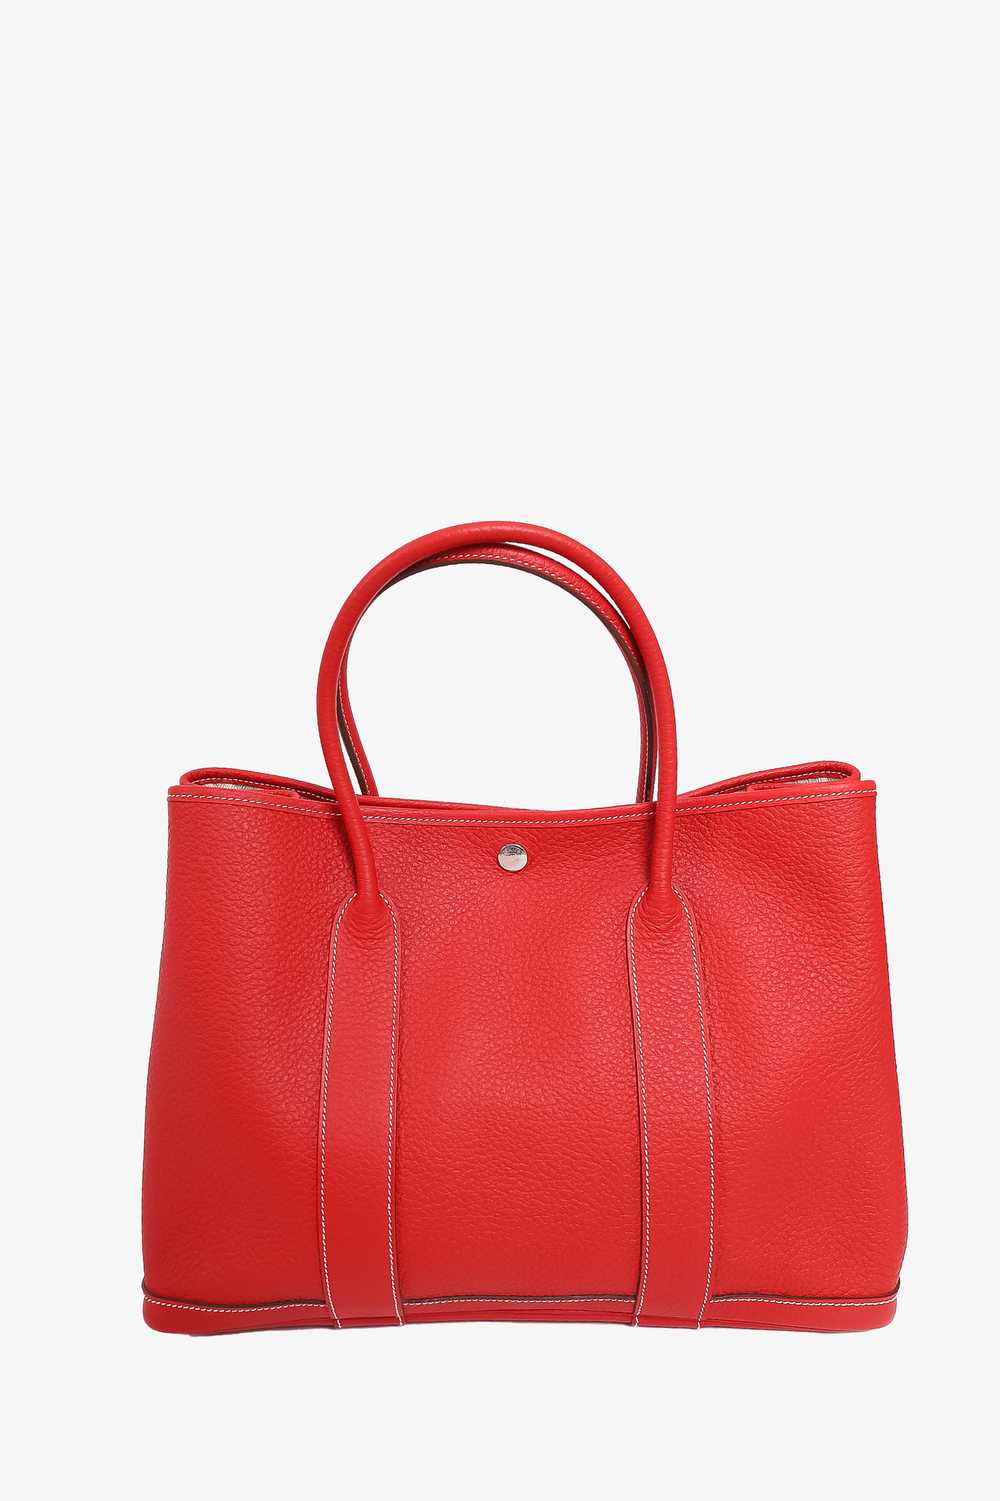 Hermès 2013 Red Negonda Garden Party 36 Tote Bag - image 1